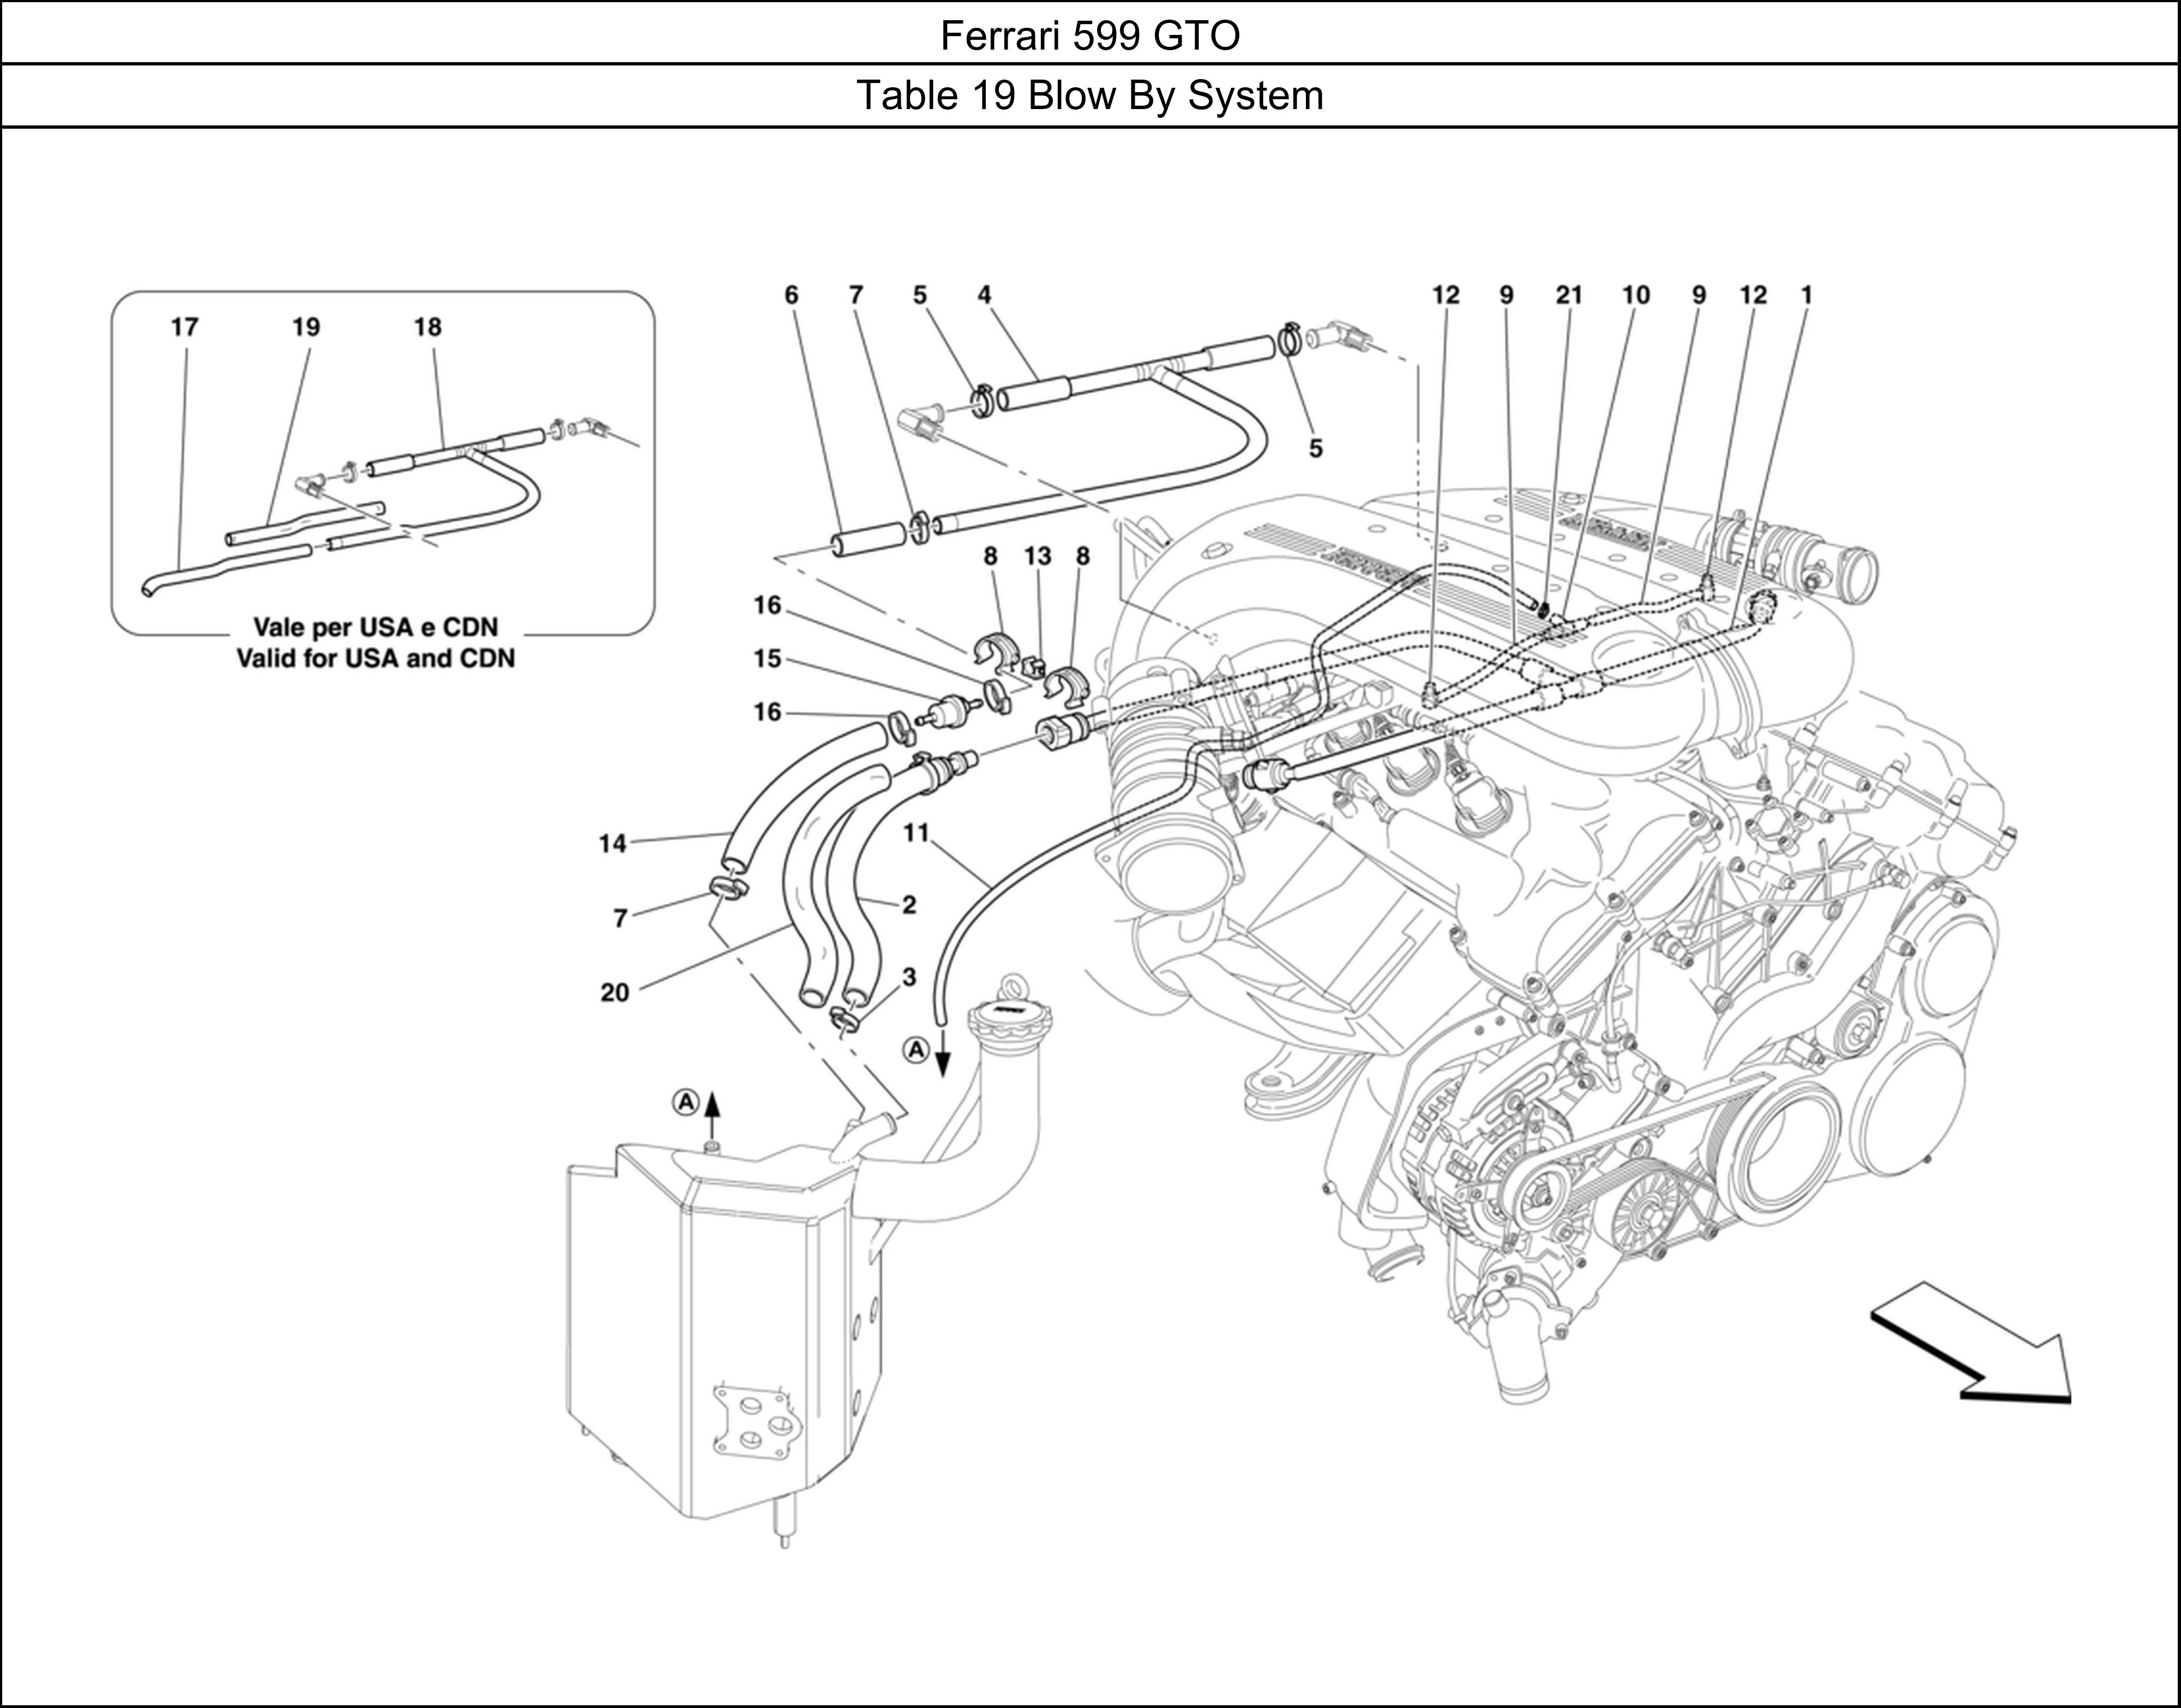 Ferrari Parts Ferrari 599 GTO Table 19 Blow By System